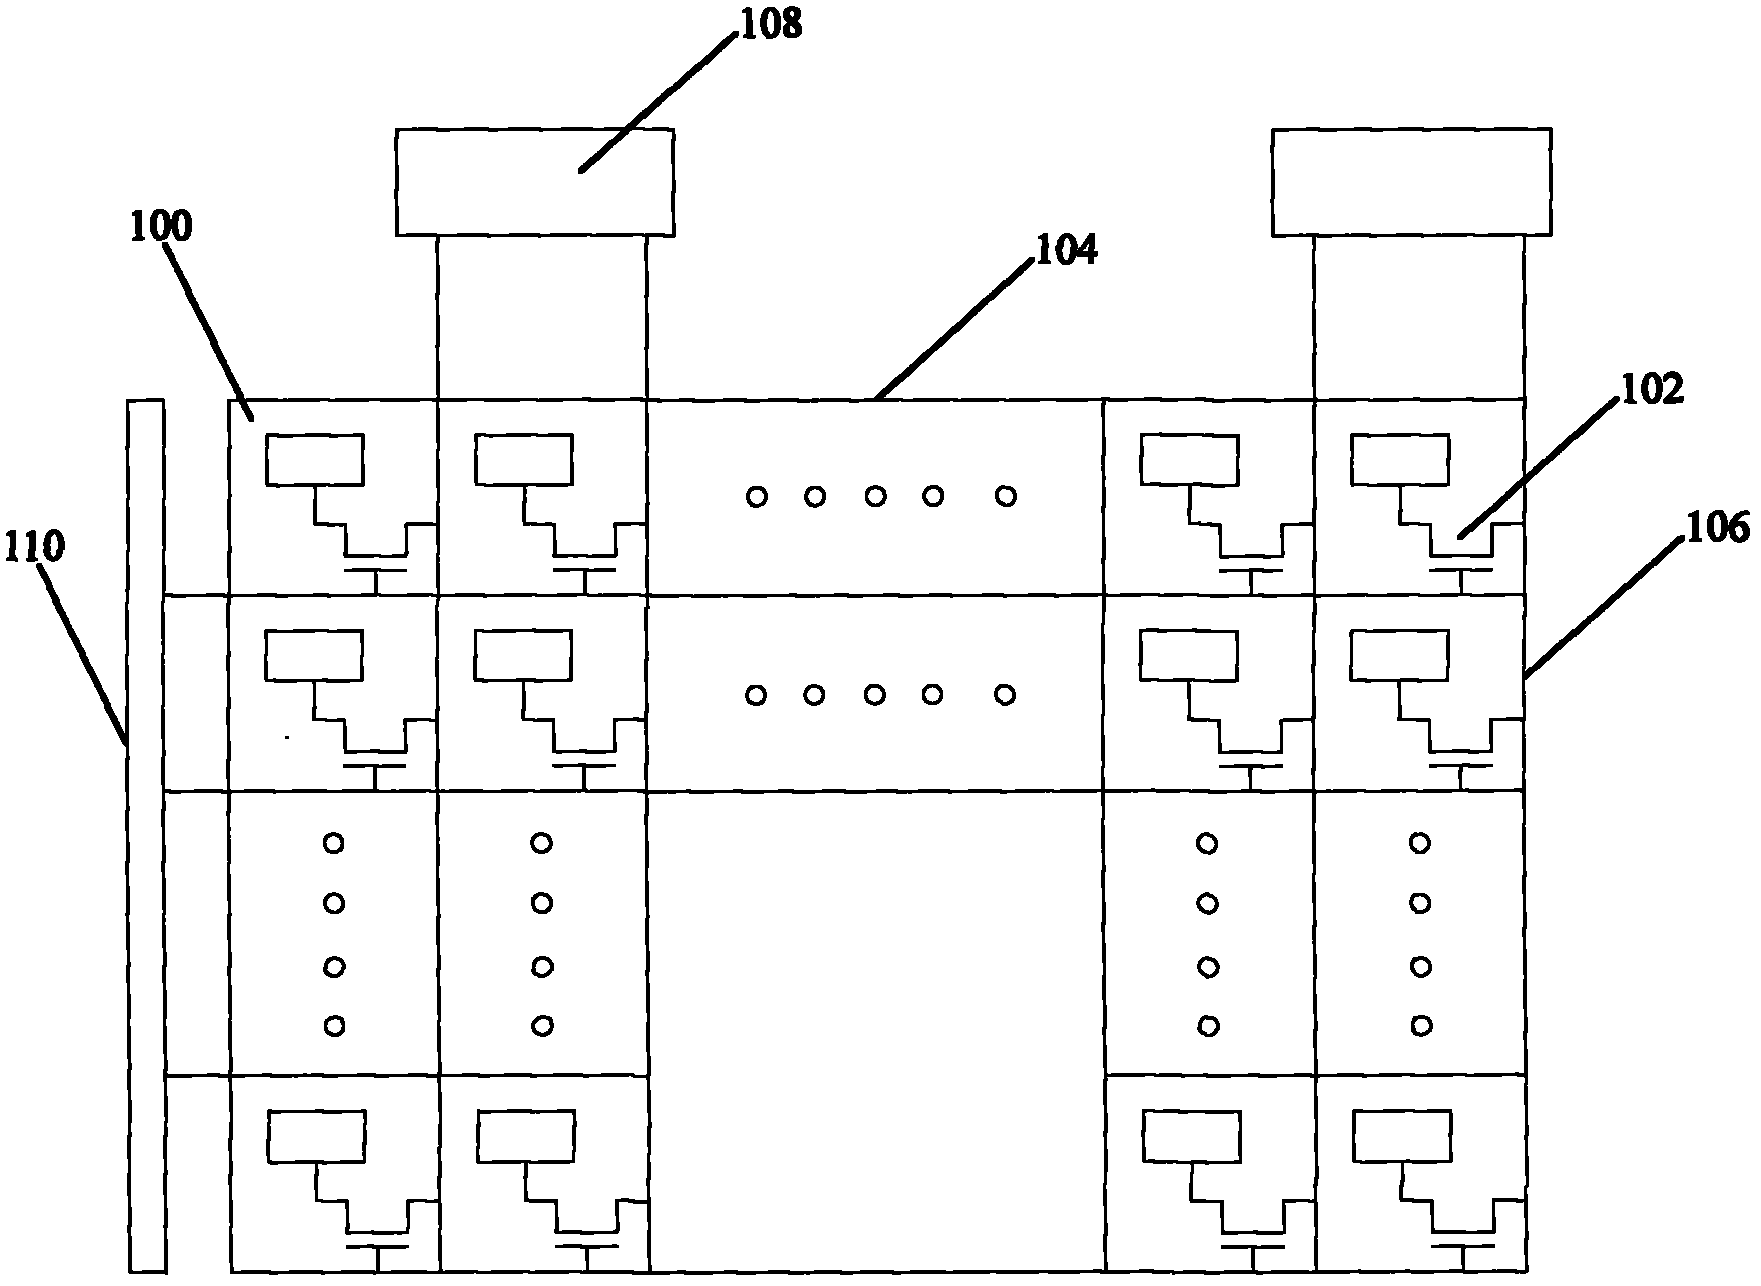 Repairing circuit for displaying panel